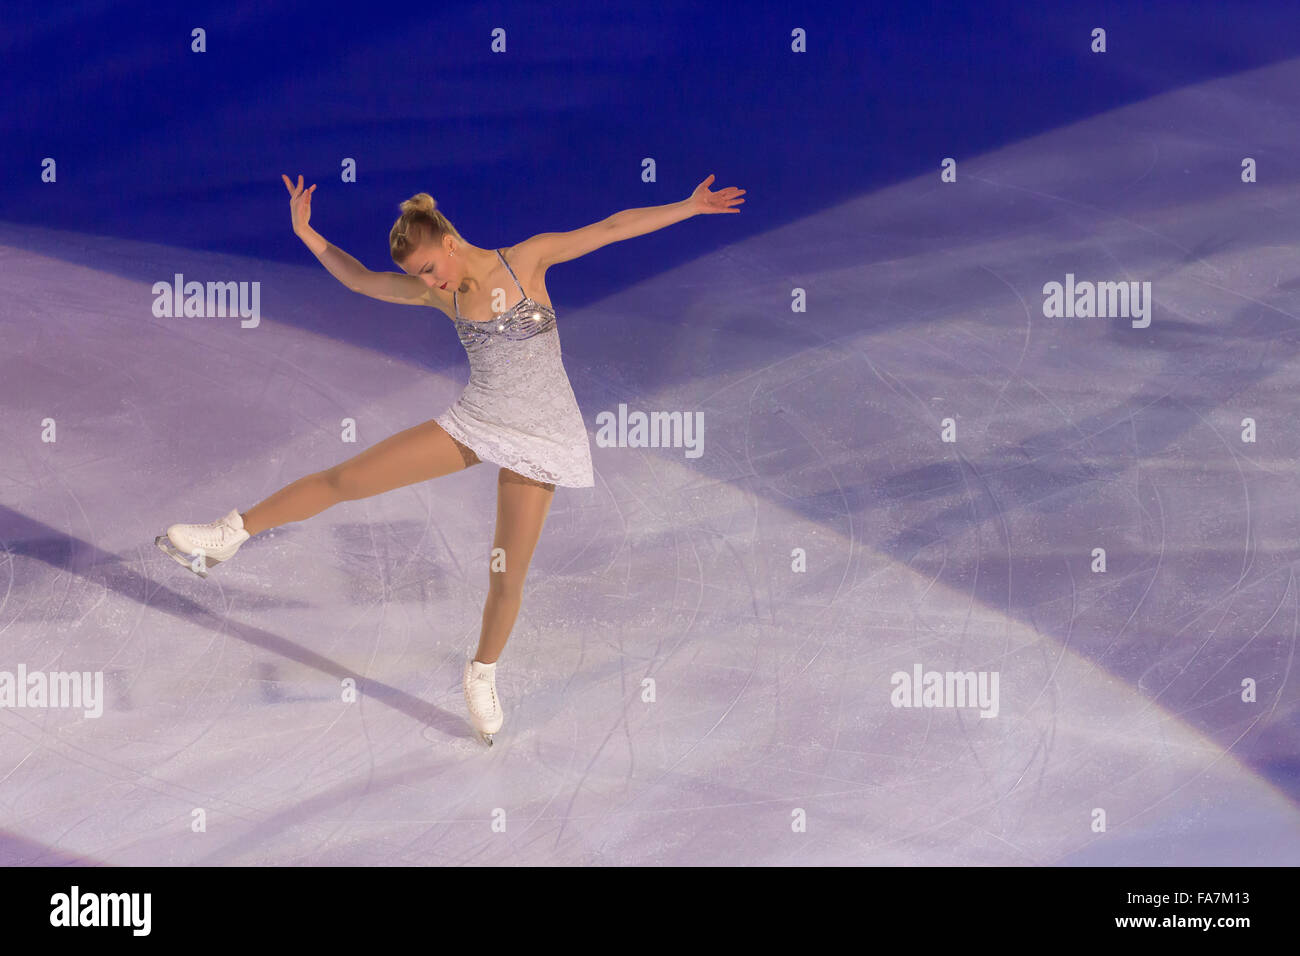 Kiira Linda Katriina Korpi  is a Finnish figure skater. She is a three-time European medalist. Stock Photo